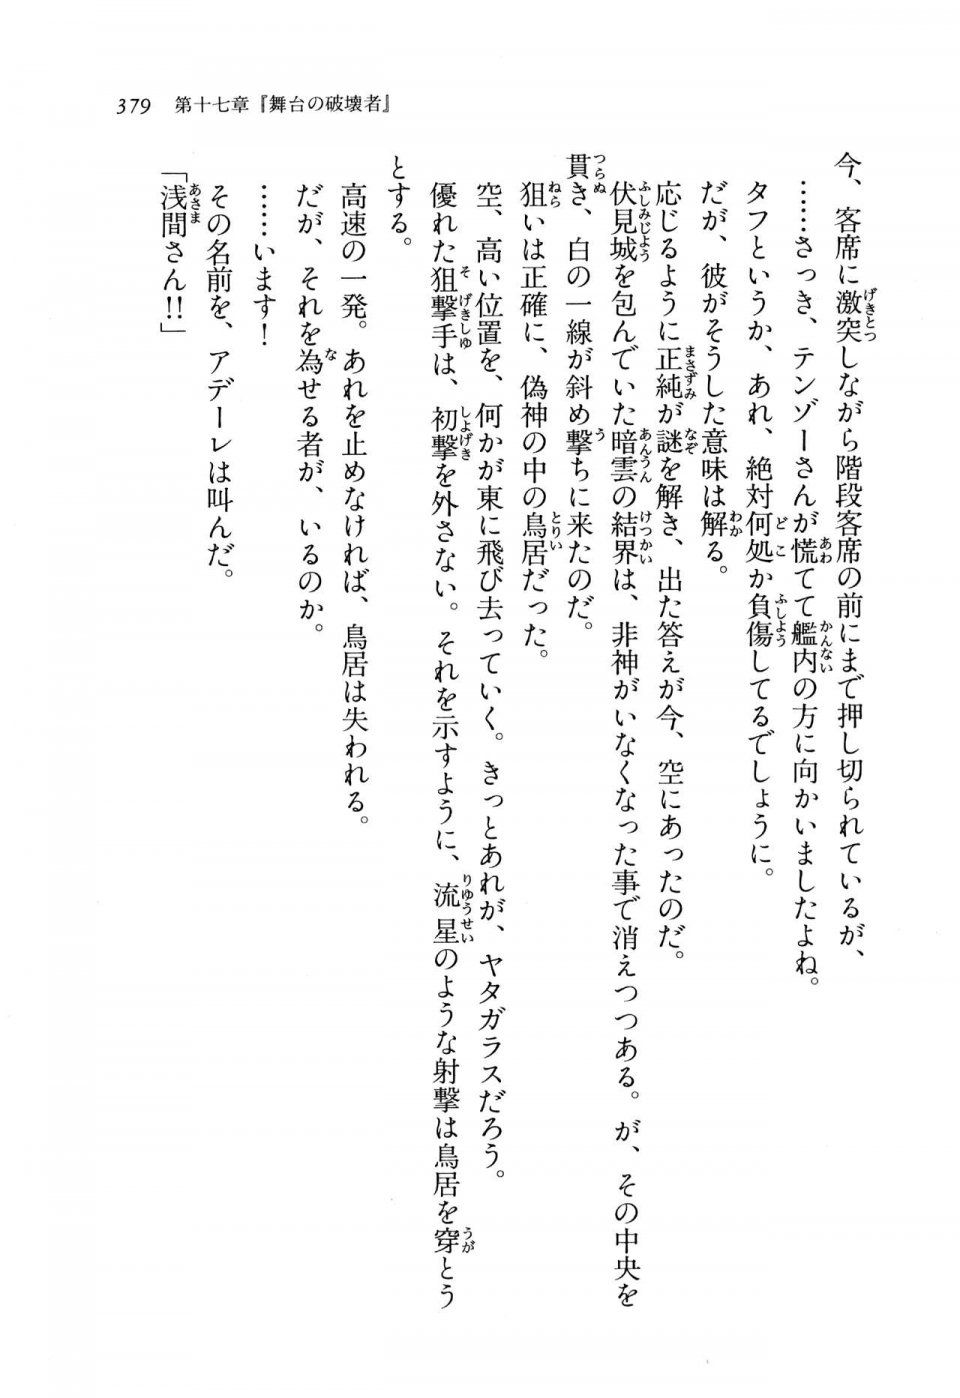 Kyoukai Senjou no Horizon BD Special Mininovel Vol 8(4B) - Photo #383